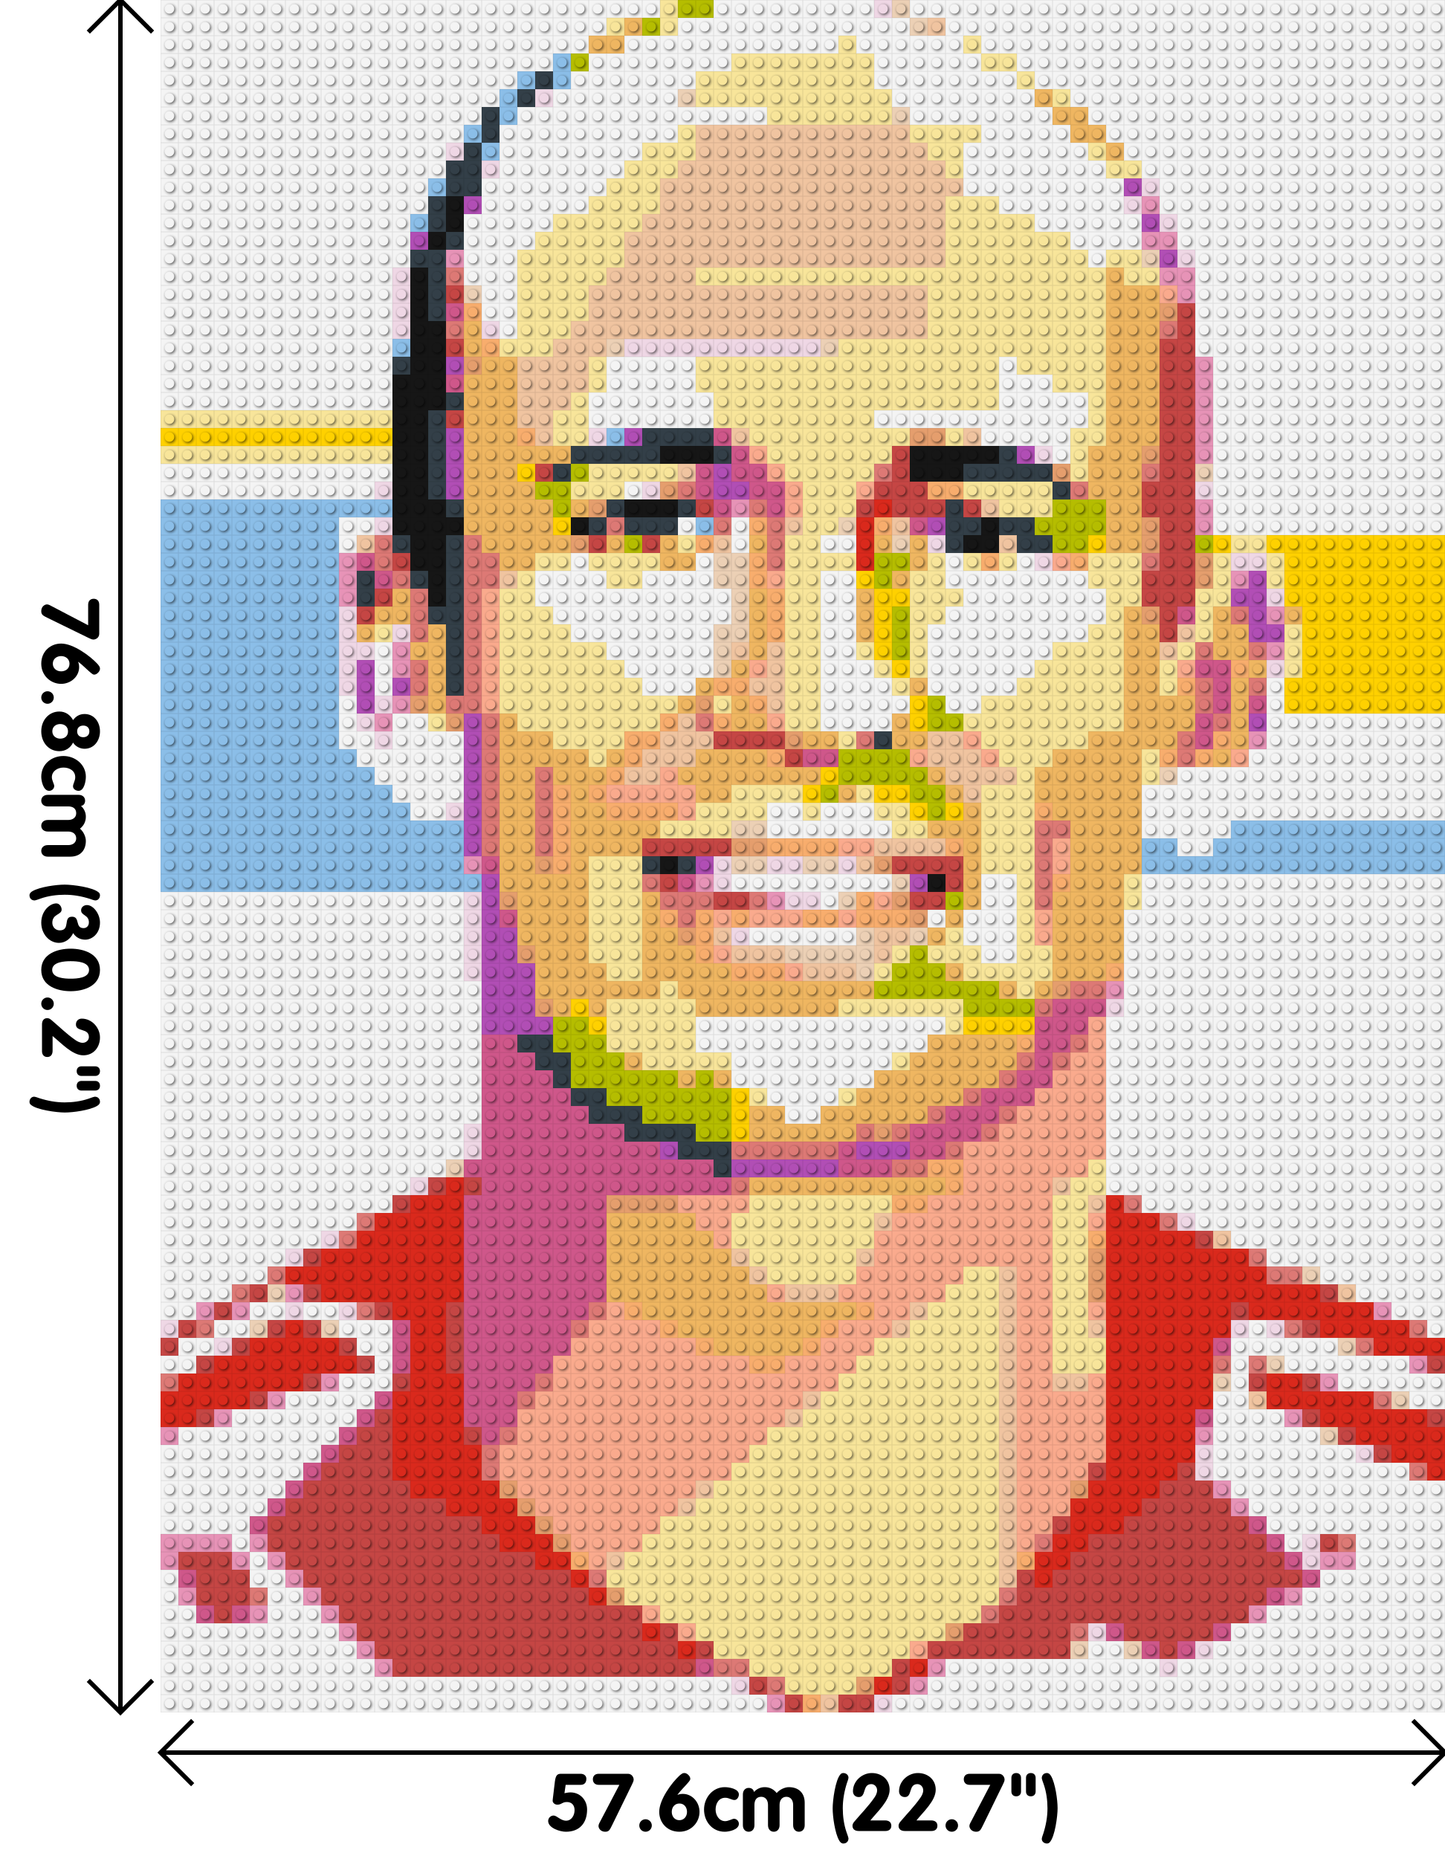 Arjen Robben - Brick Art Mosaic Kit